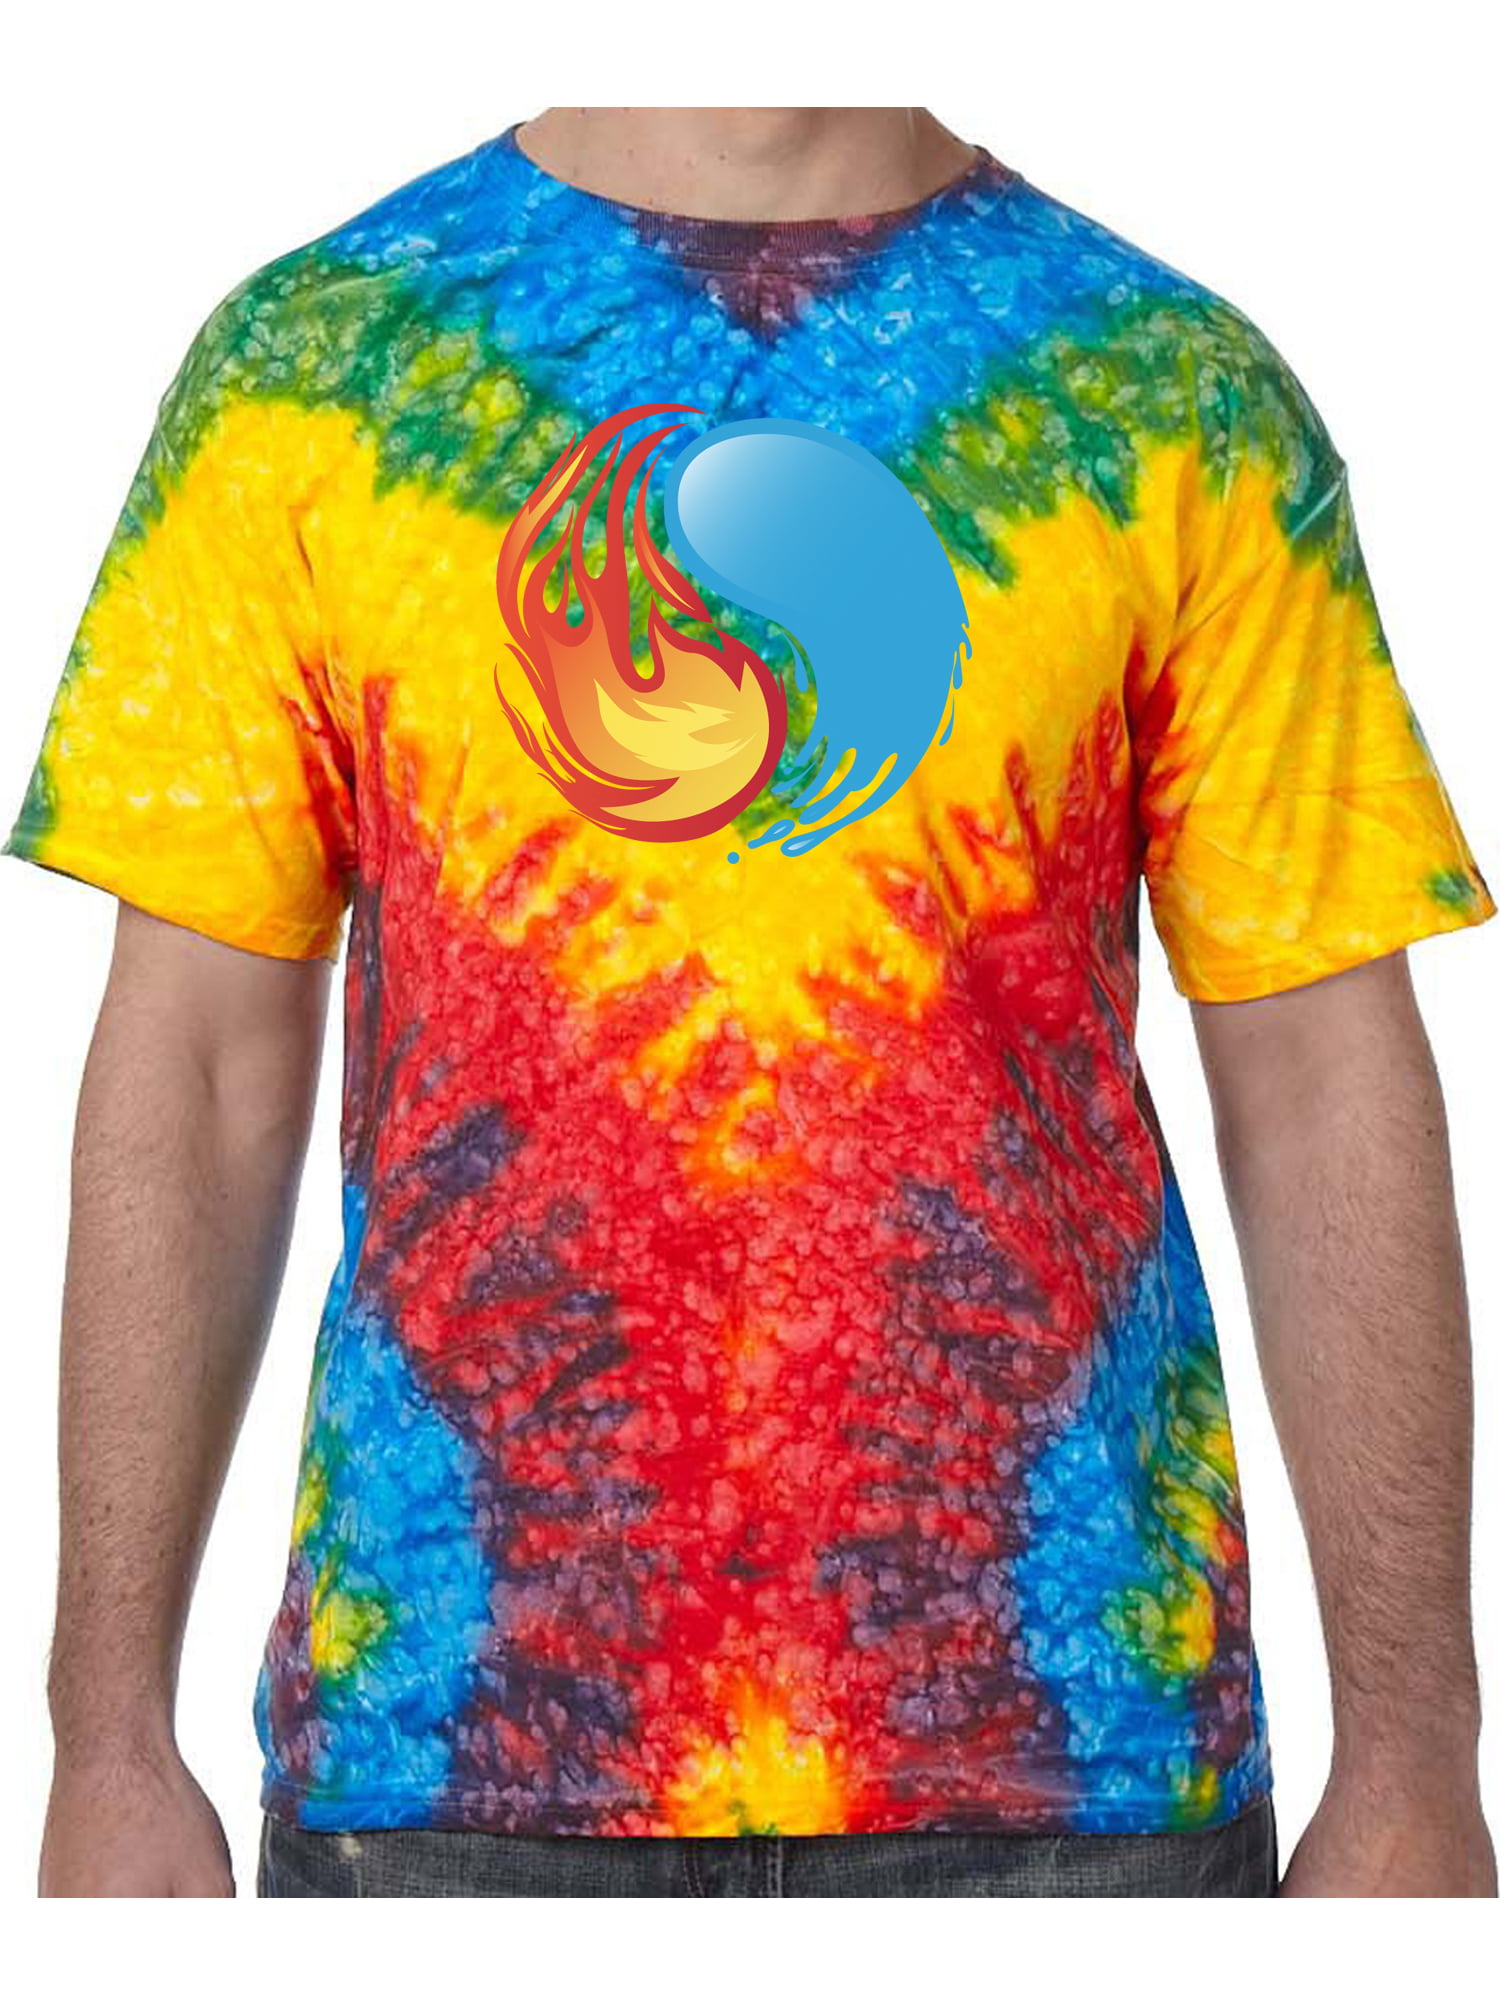 Melting Yin Yang Rainbow Tie Dye T-Shirt Clothing Gender-Neutral Adult Clothing Tops & Tees T-shirts 